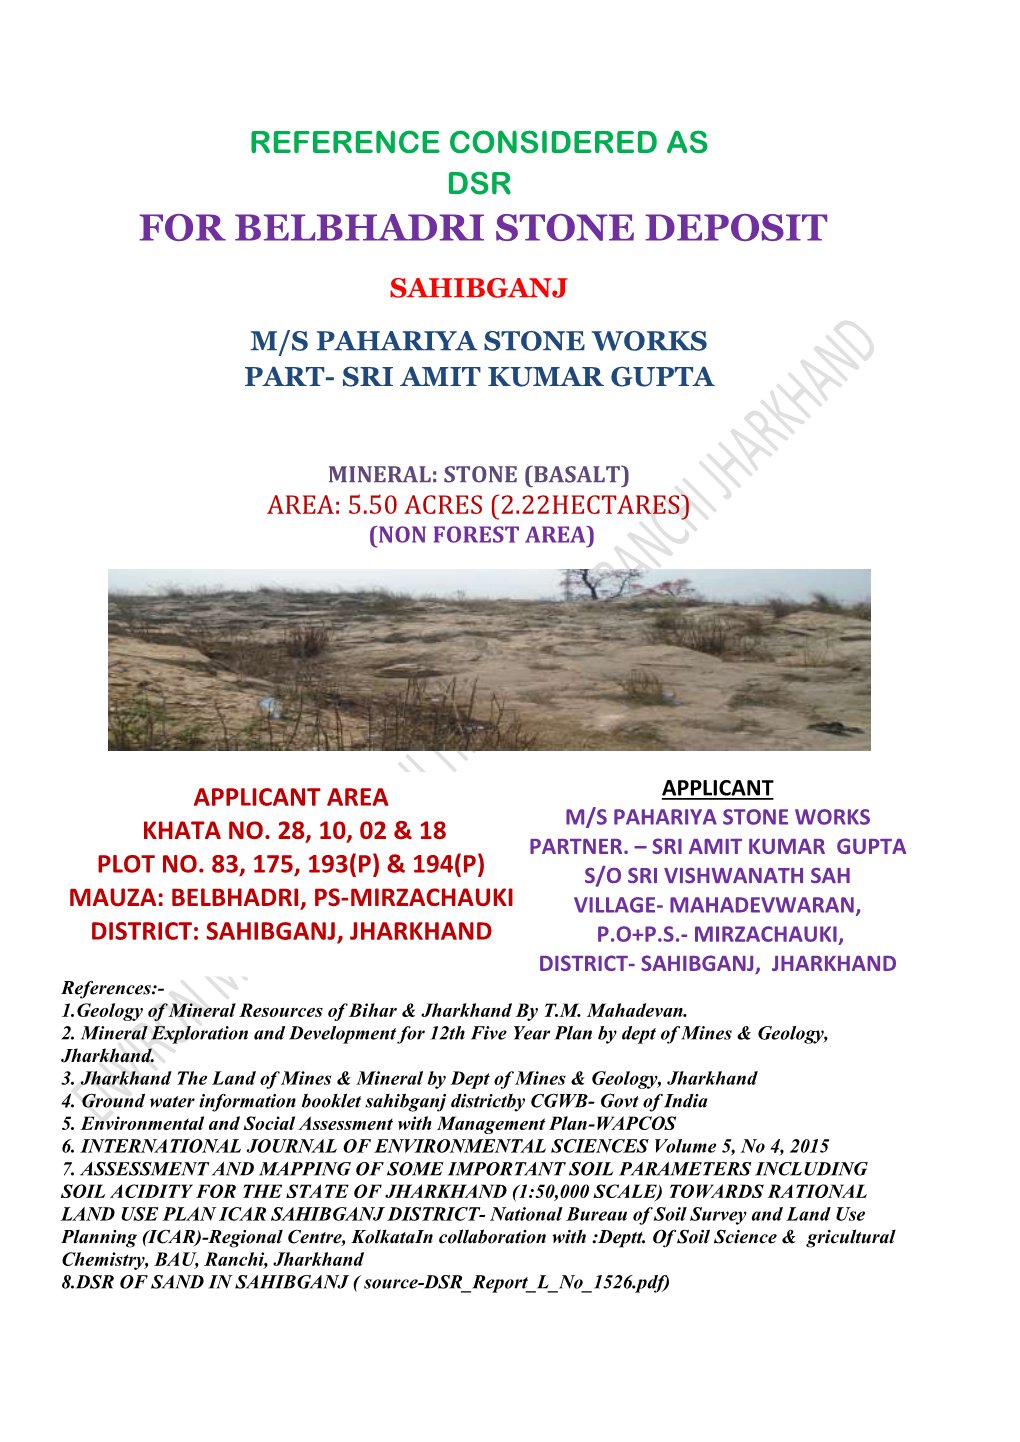 SAHIBGANJ, JHARKHAND P.O+P.S.- MIRZACHAUKI, DISTRICT- SAHIBGANJ, JHARKHAND References:- 1.Geology of Mineral Resources of Bihar & Jharkhand by T.M